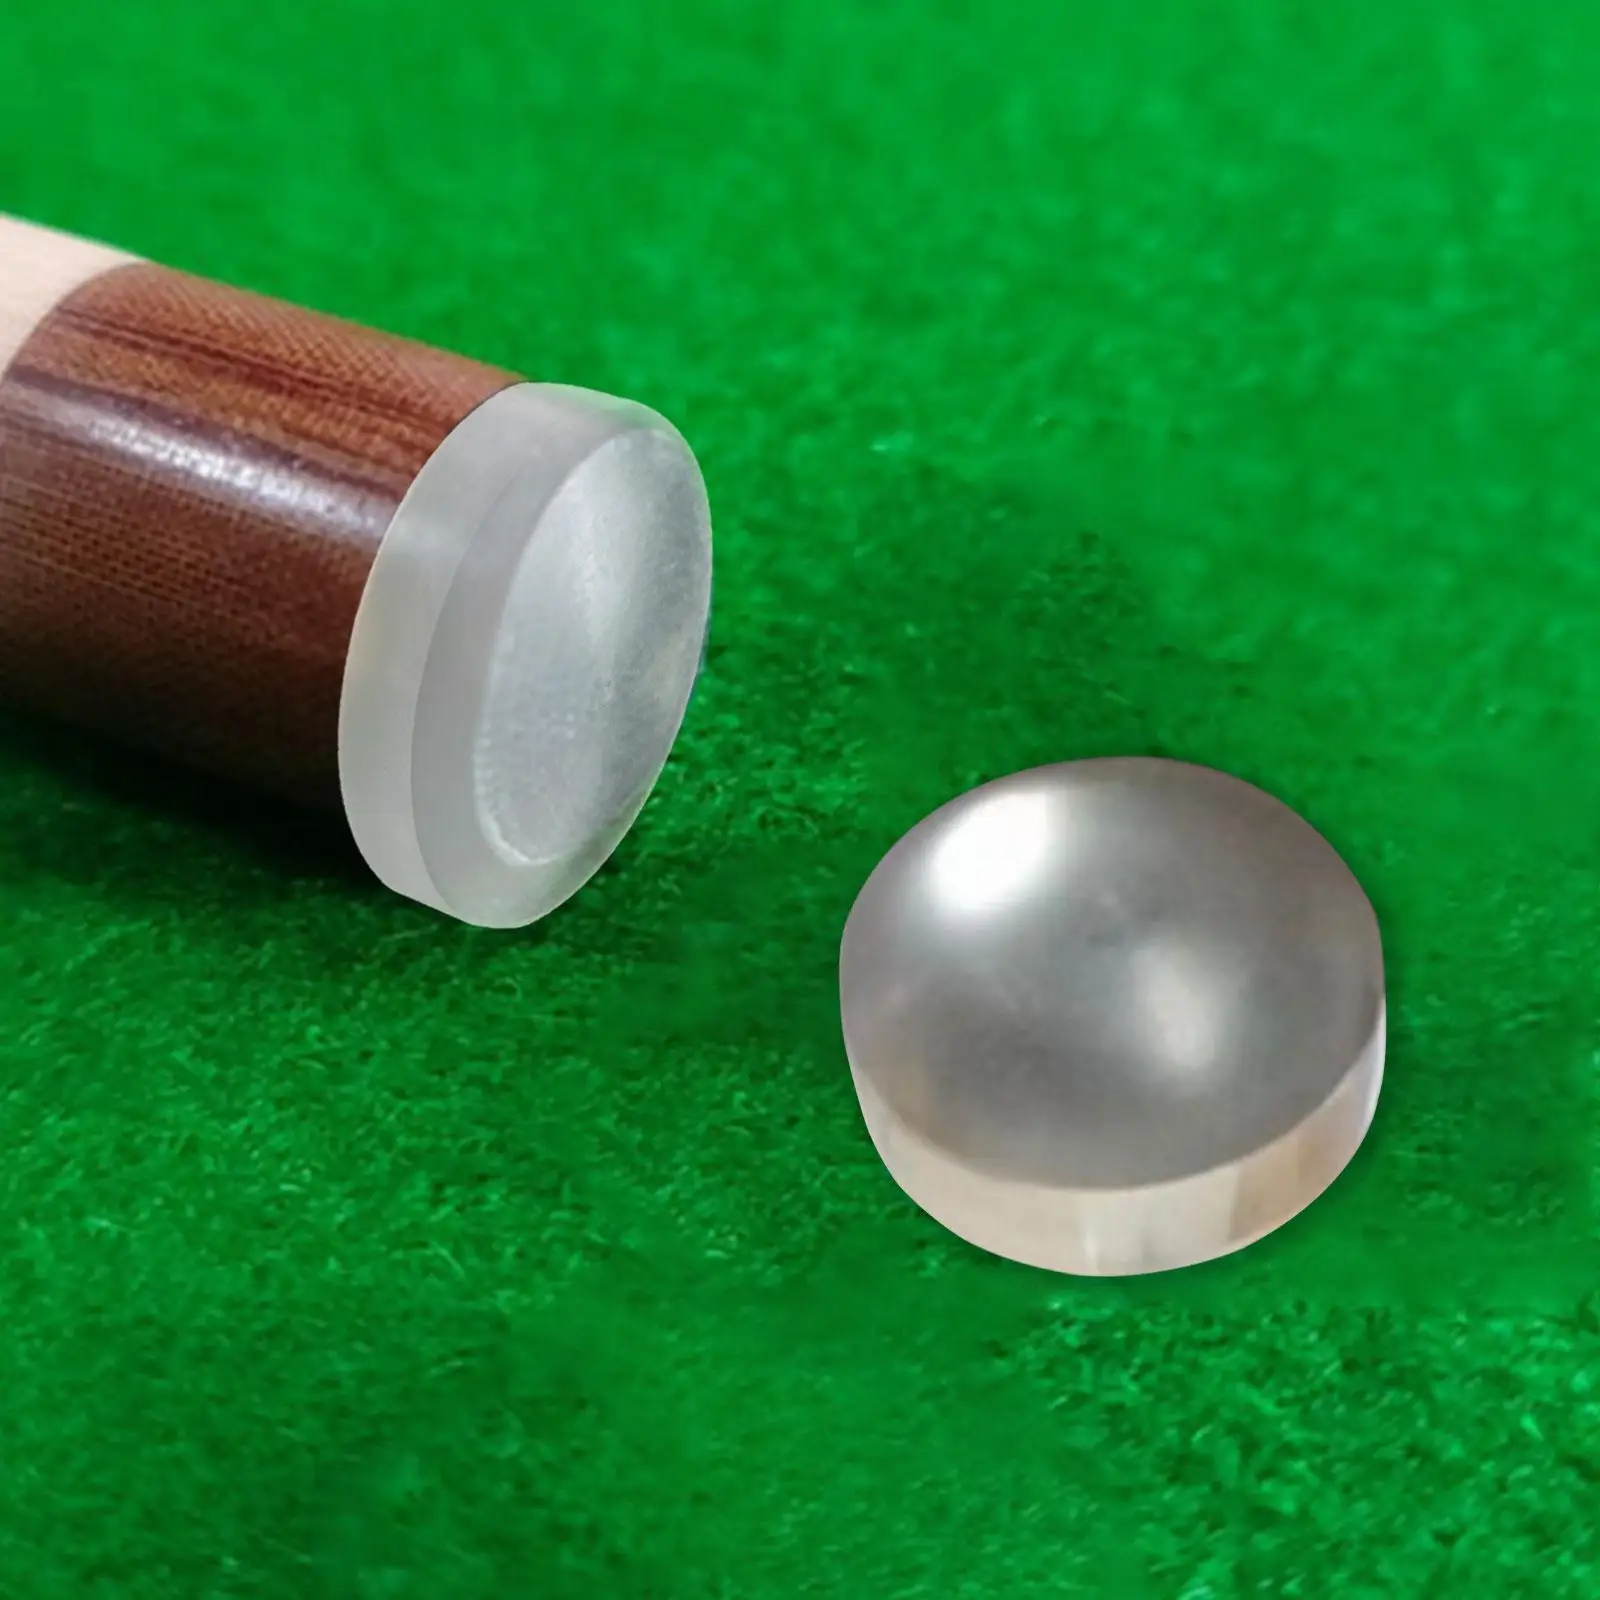 Billiard Pool Cue Tip 13mm Replacement Cue Accessory High Hardness Break/Jump